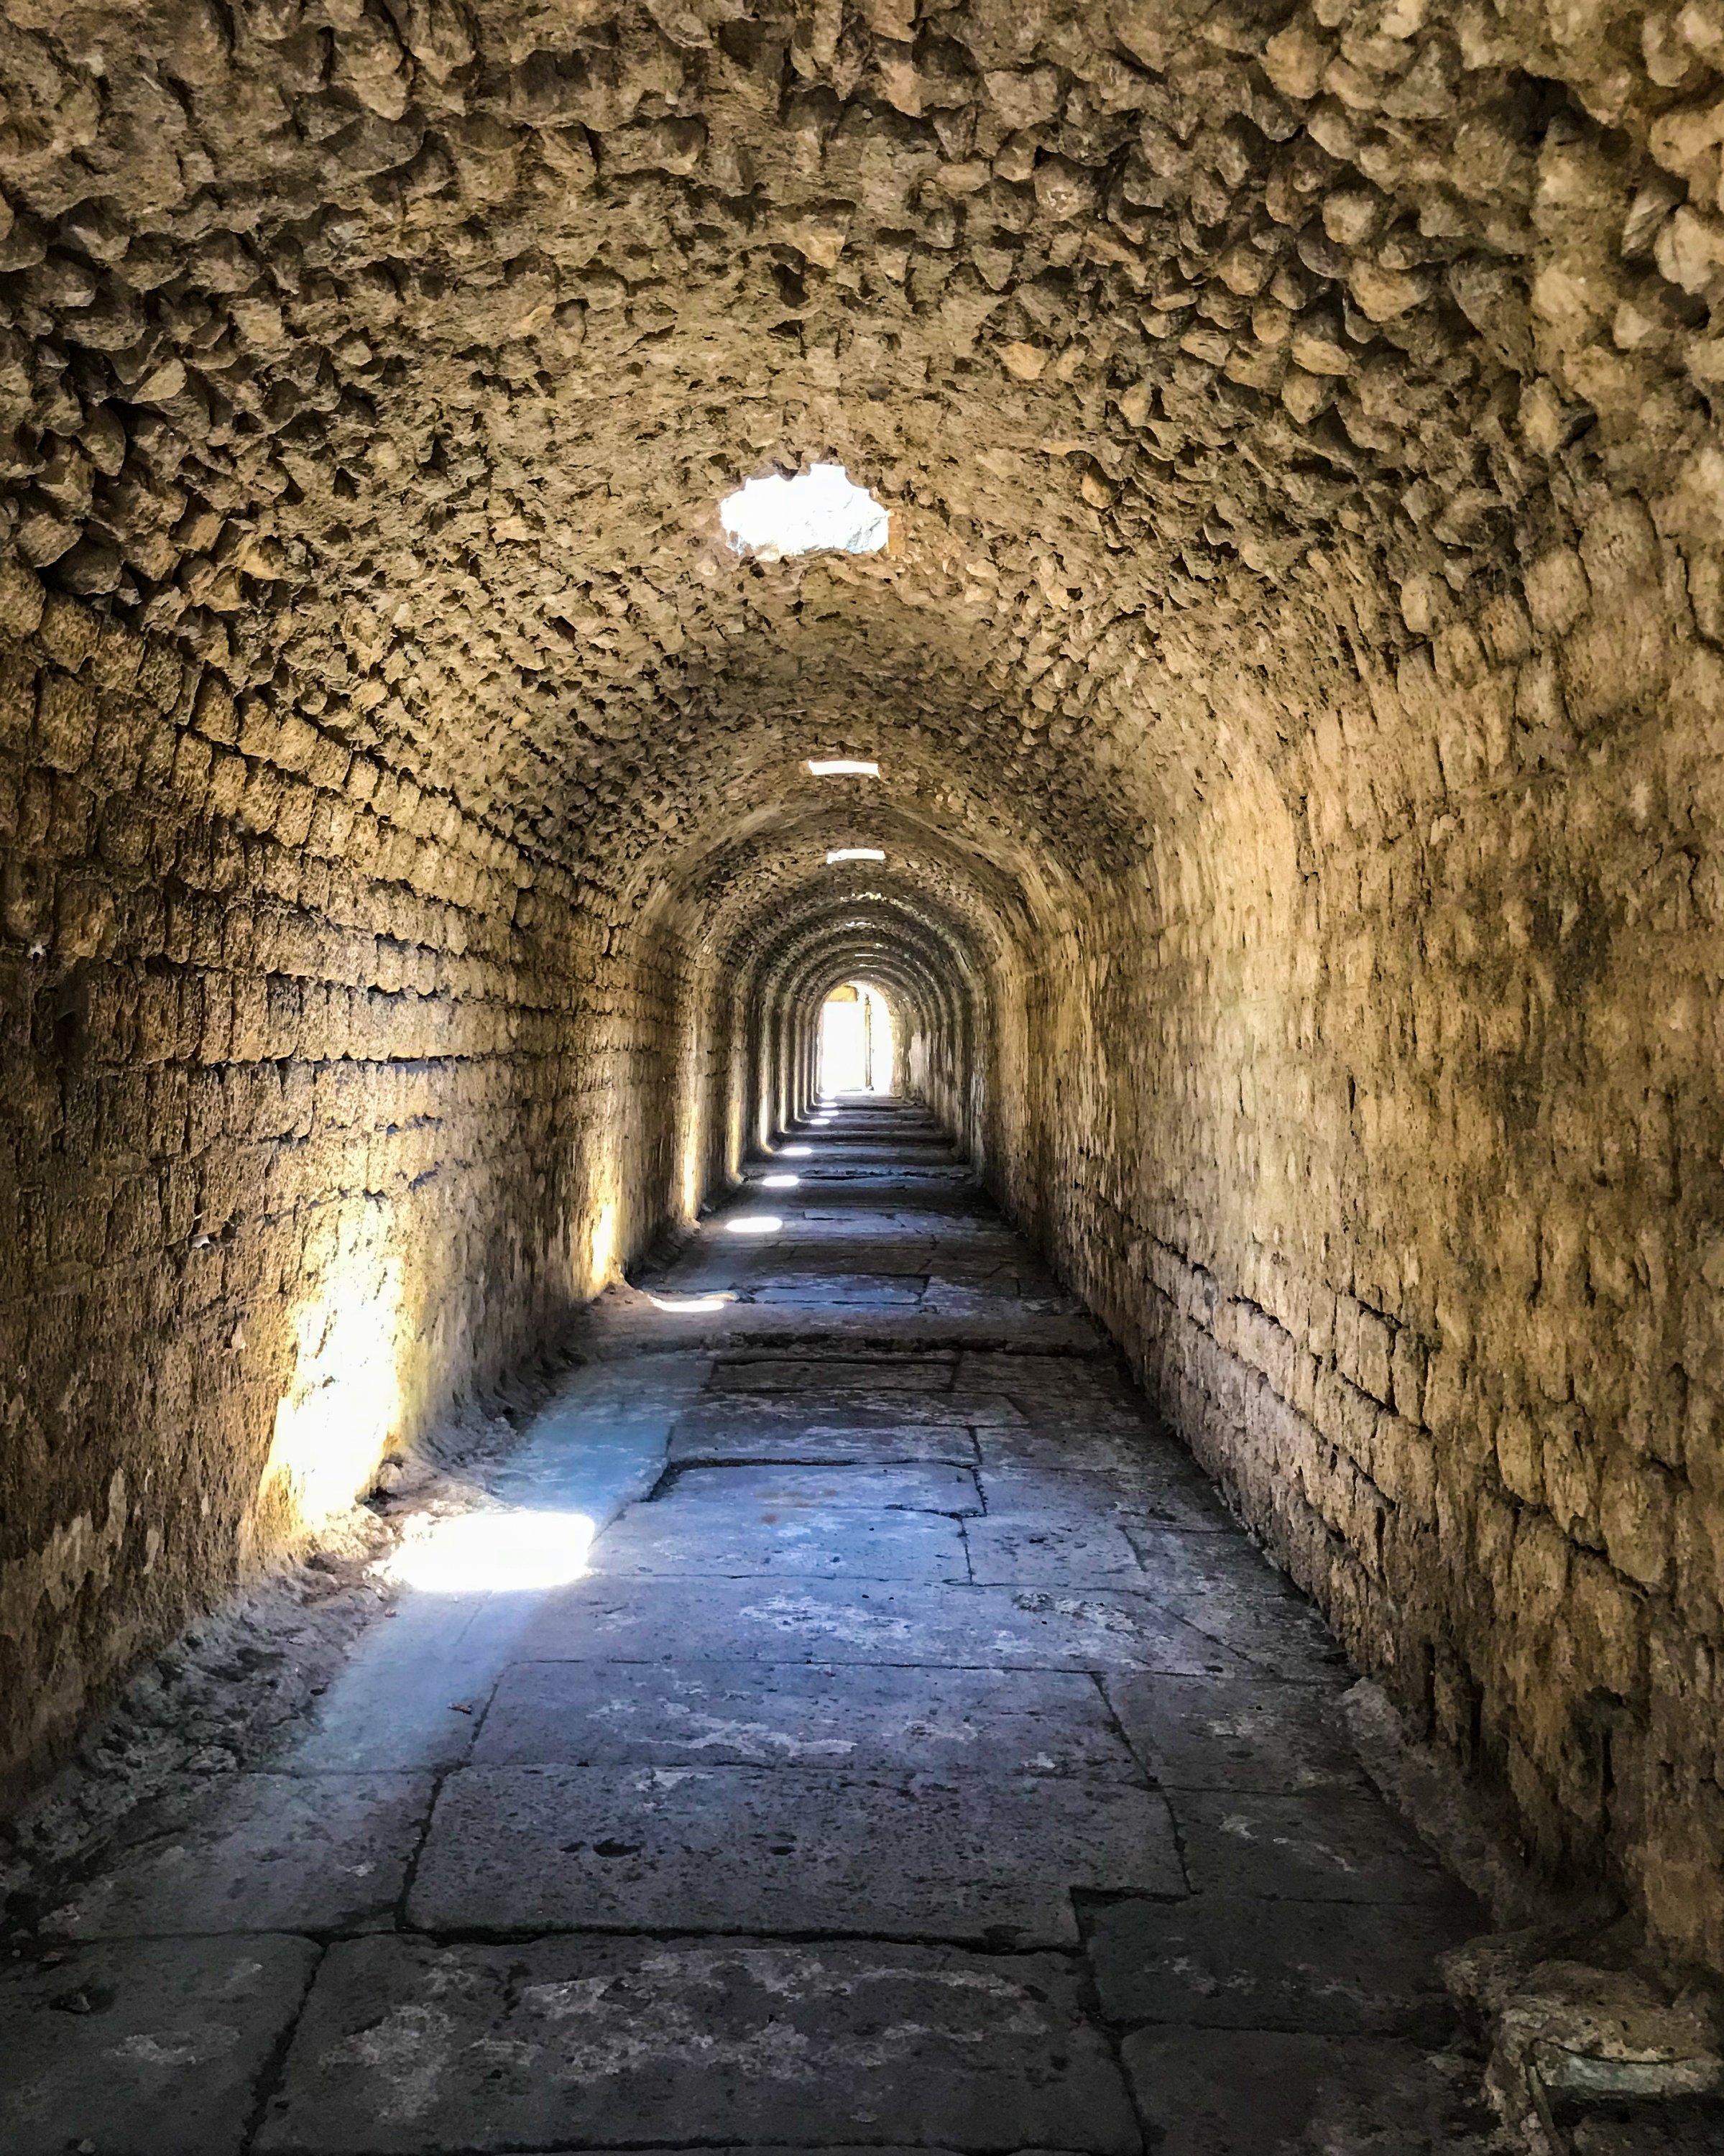 The tunnel at Asklepion, Izmir. (Photo by Argun Konuk)